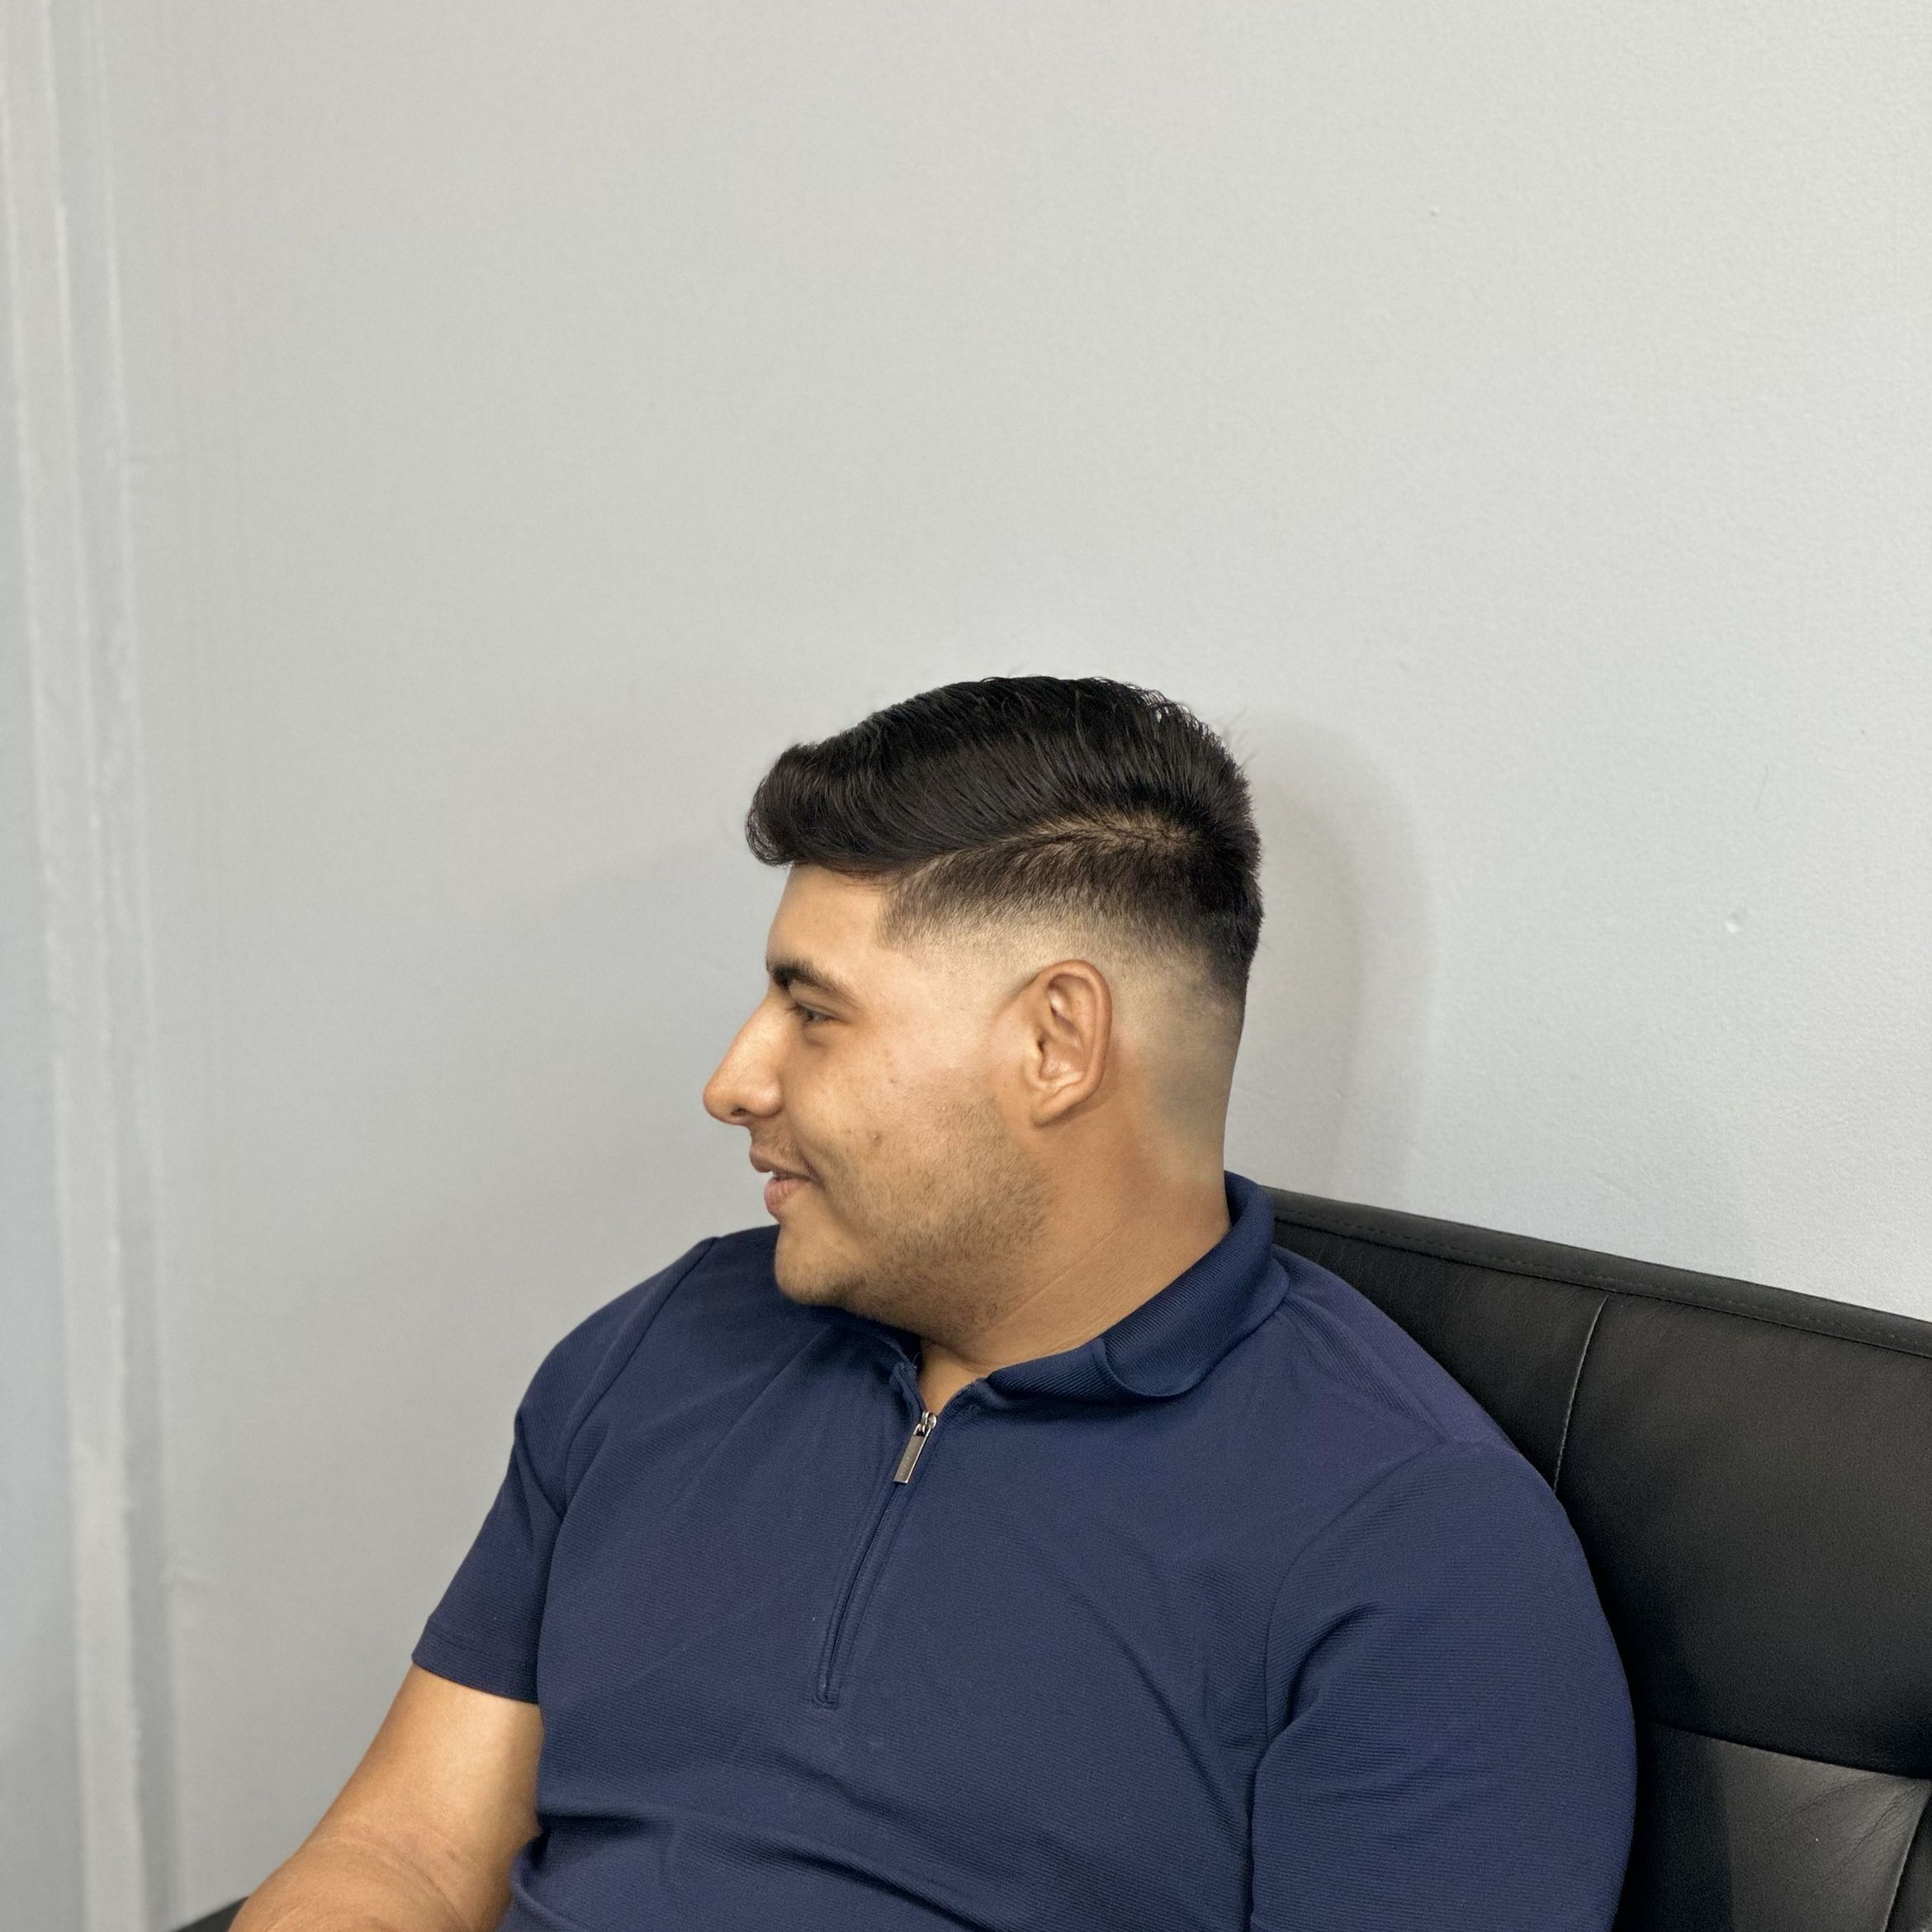 Haircut With (NO BEARD) portfolio